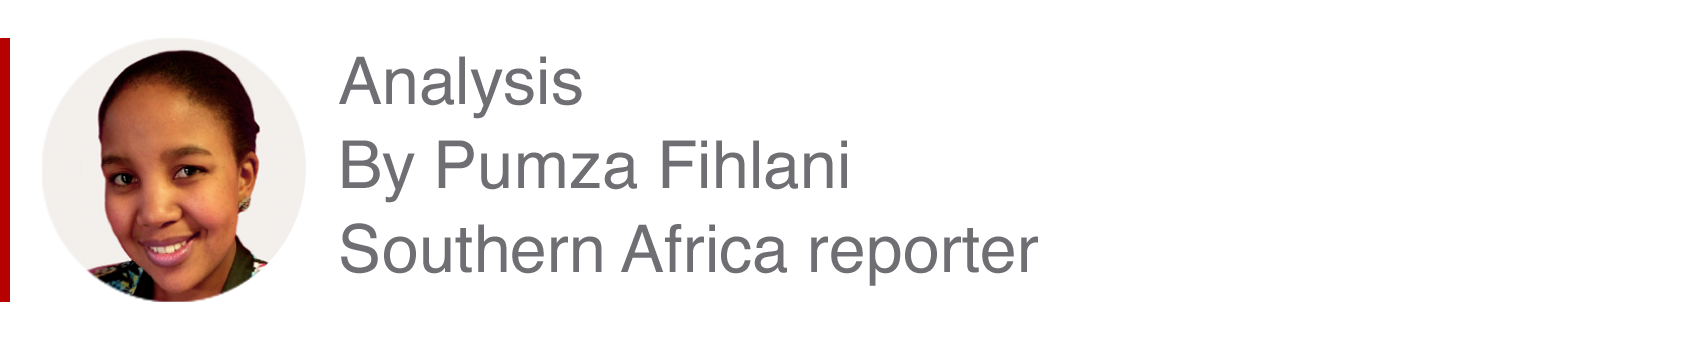 Analysis box by Pumza Fihlani, southern Africa reporter